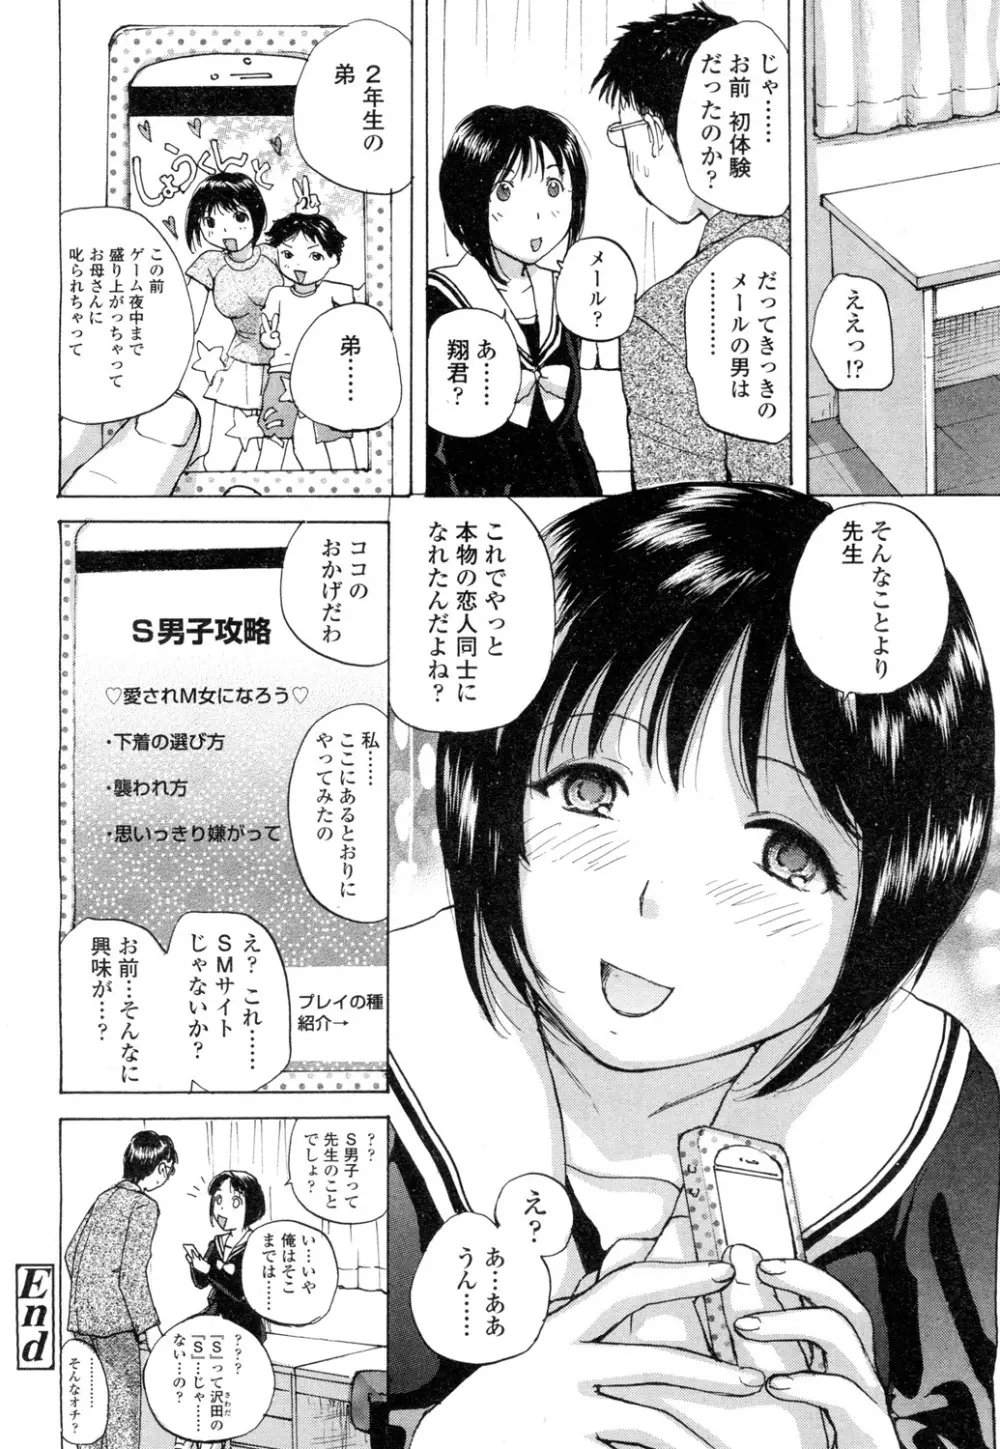 COMIC 高 Vol.1 485ページ